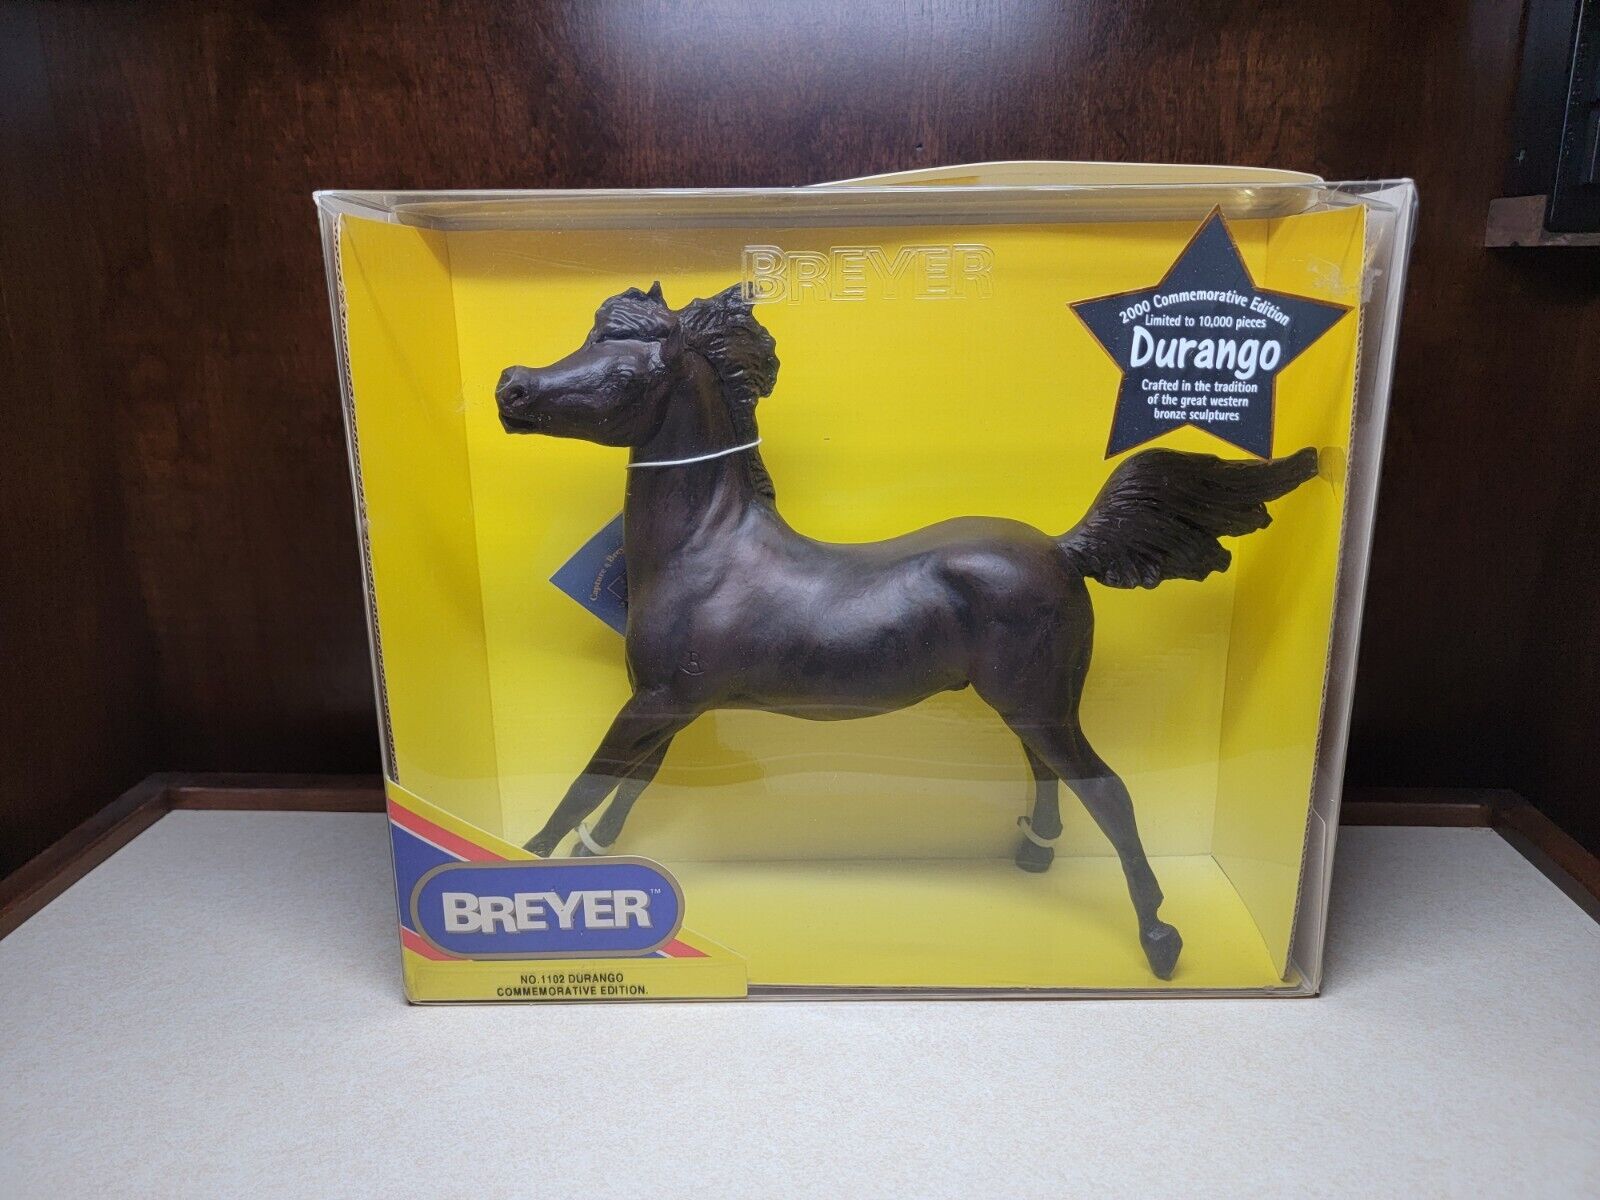 Breyer Horse Durango 2000 #03773 on the belly NIB NBRB Smokey Mold w/hangtag